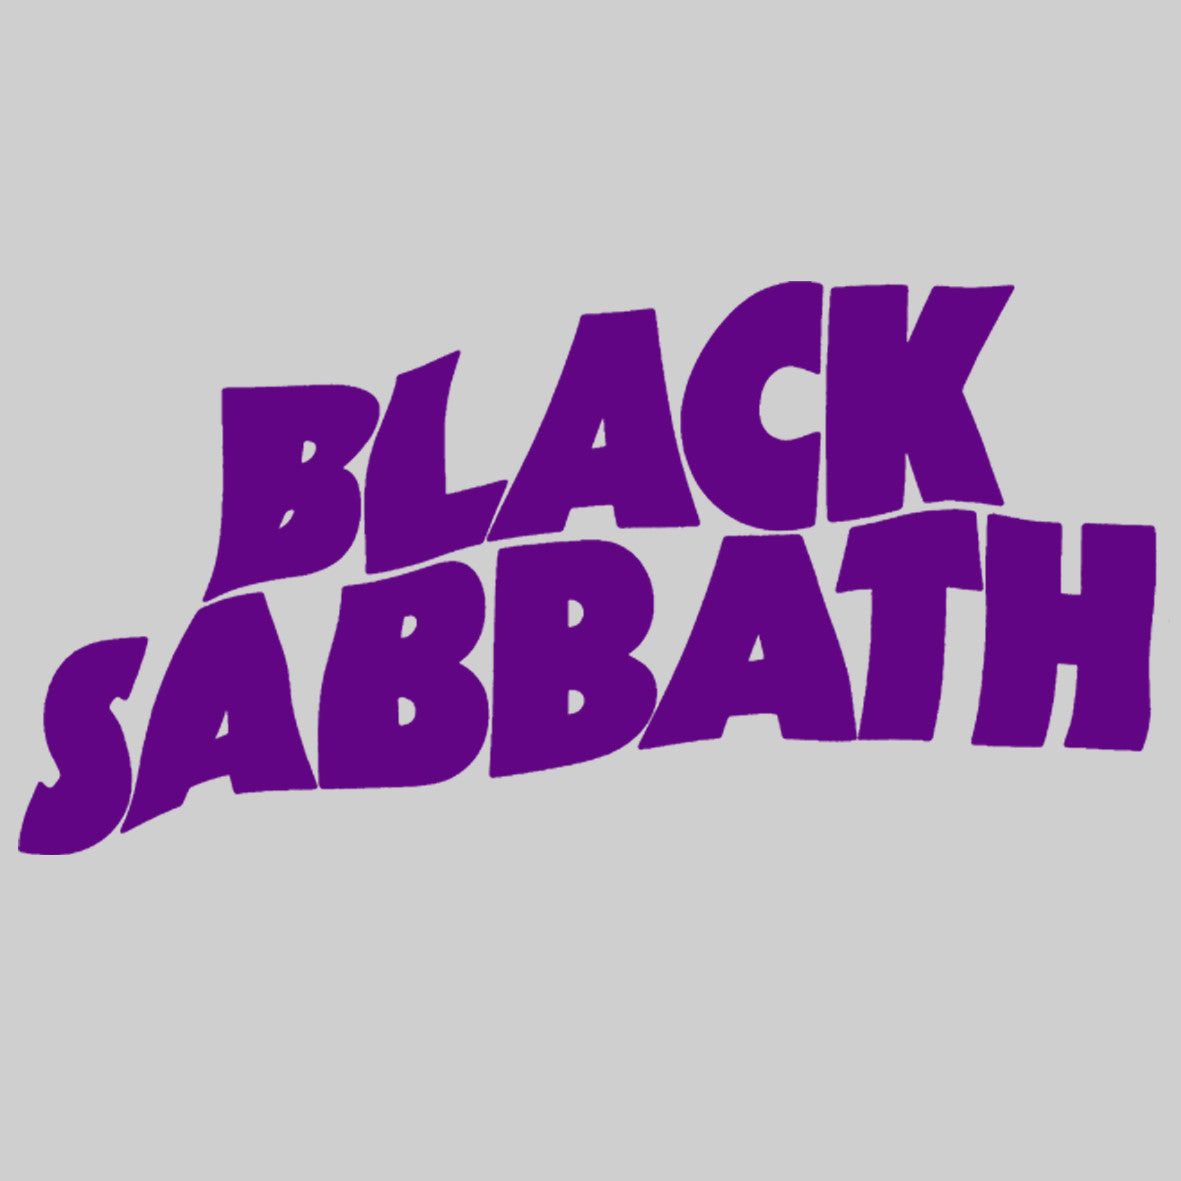 Black Sabbath logo – CENTRAL T-SHIRTS